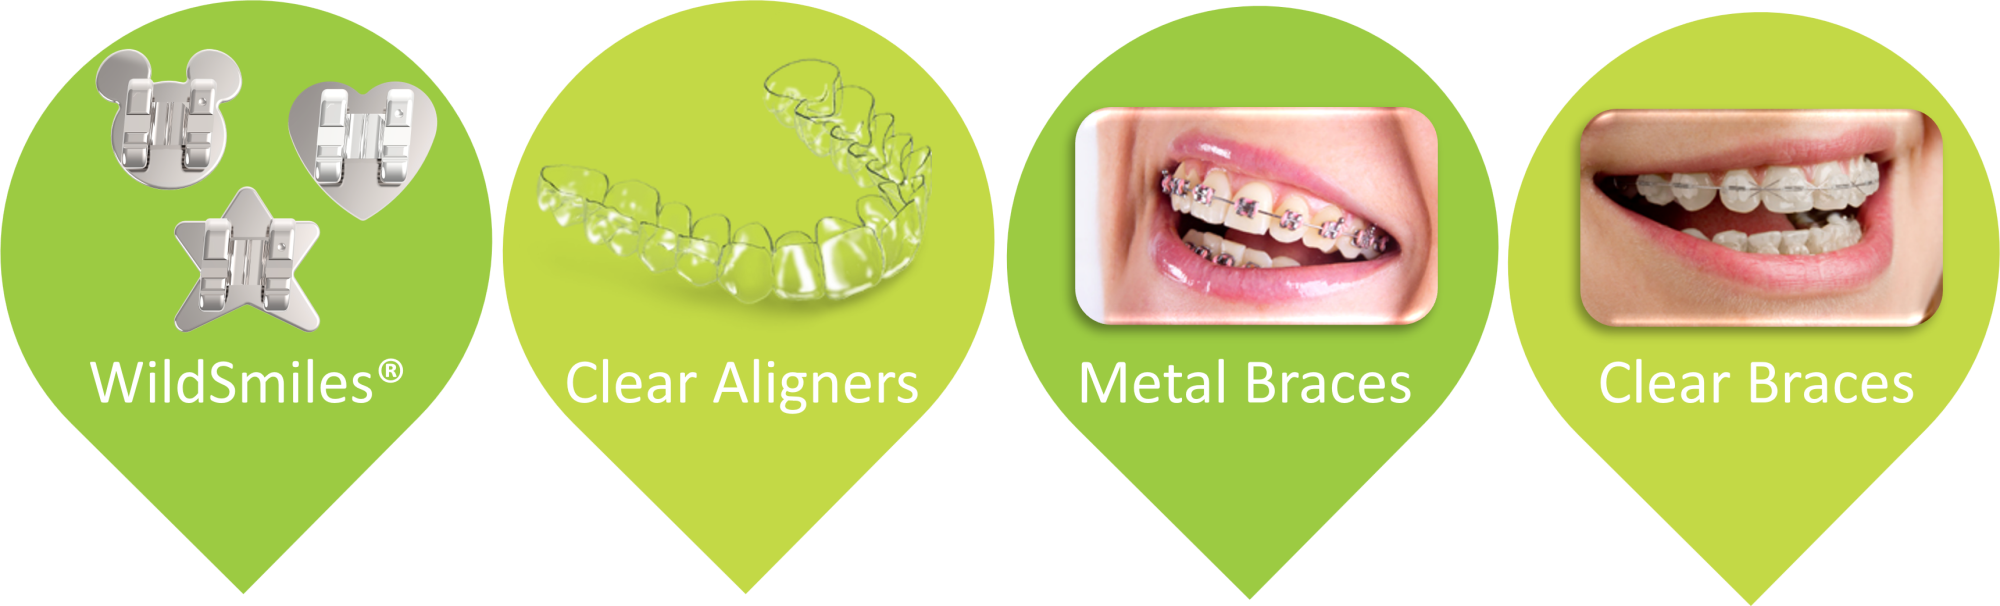 Types of Braces - Spring Pediatric Dentistry & Orthodontics